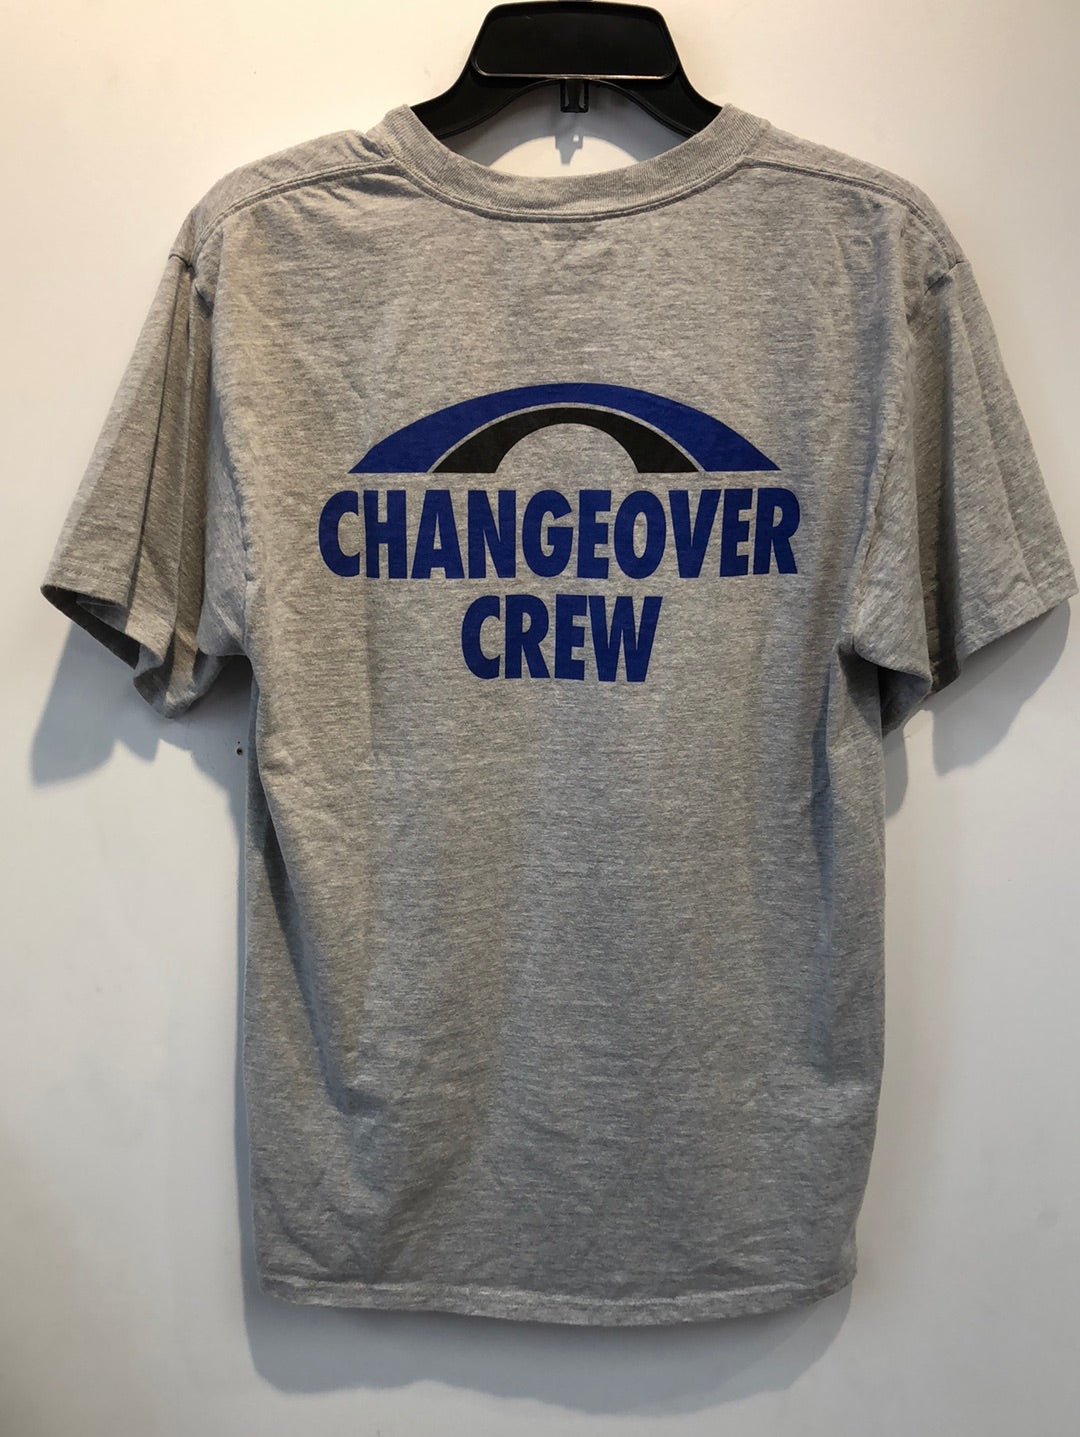 Carrier Dome "Changeover Crew" T-Shirt Medium TS223